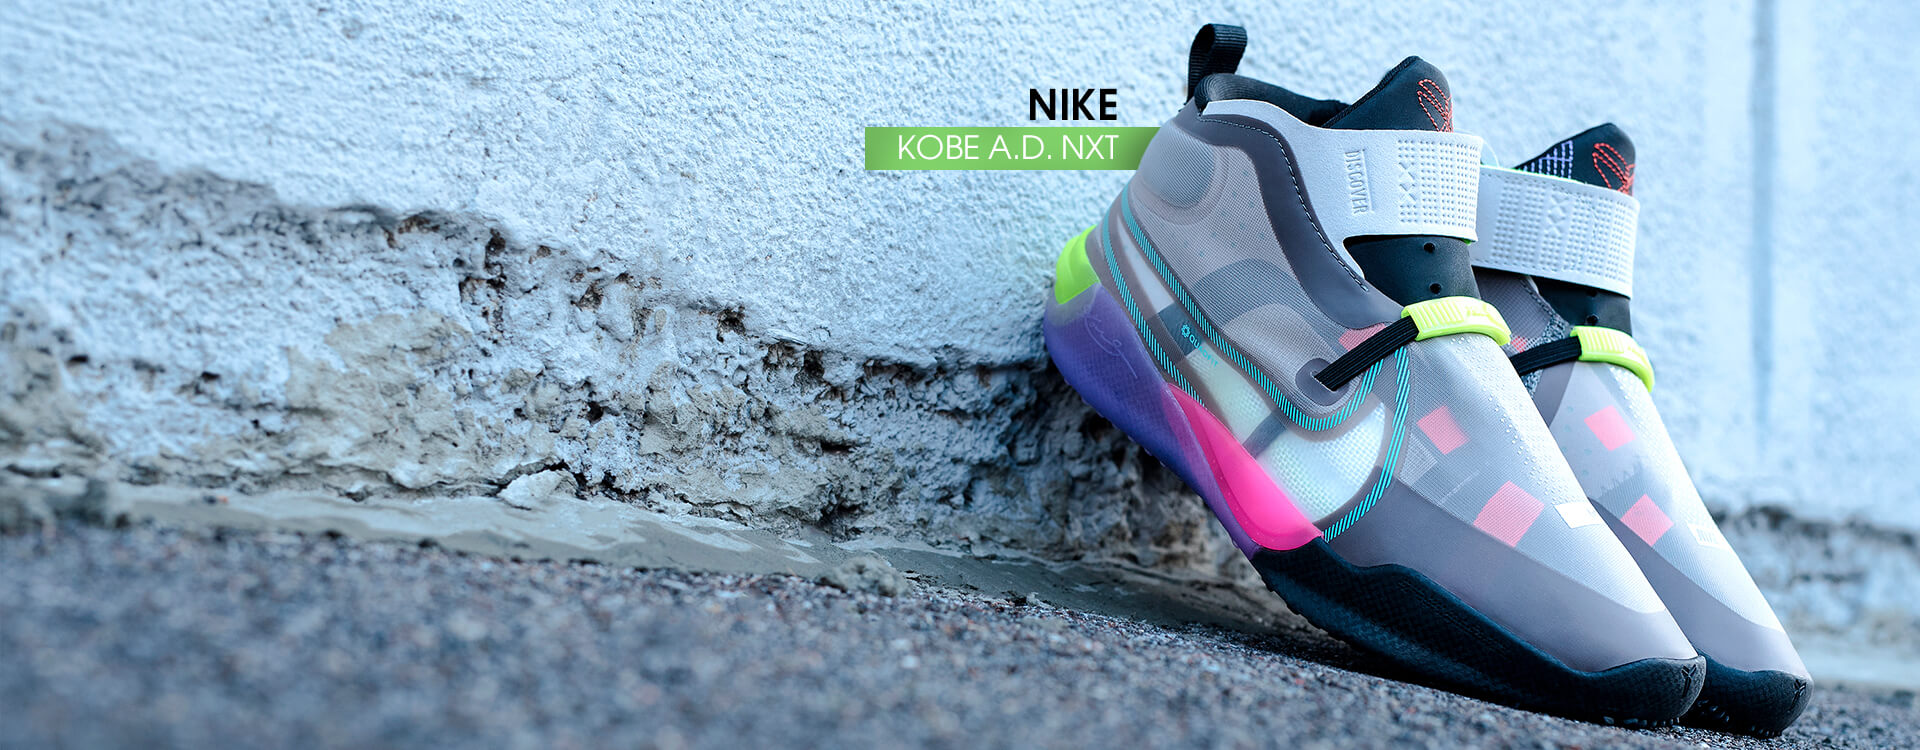 Баскетбольные кроссовки Nike Kobe A.D. NXT FF